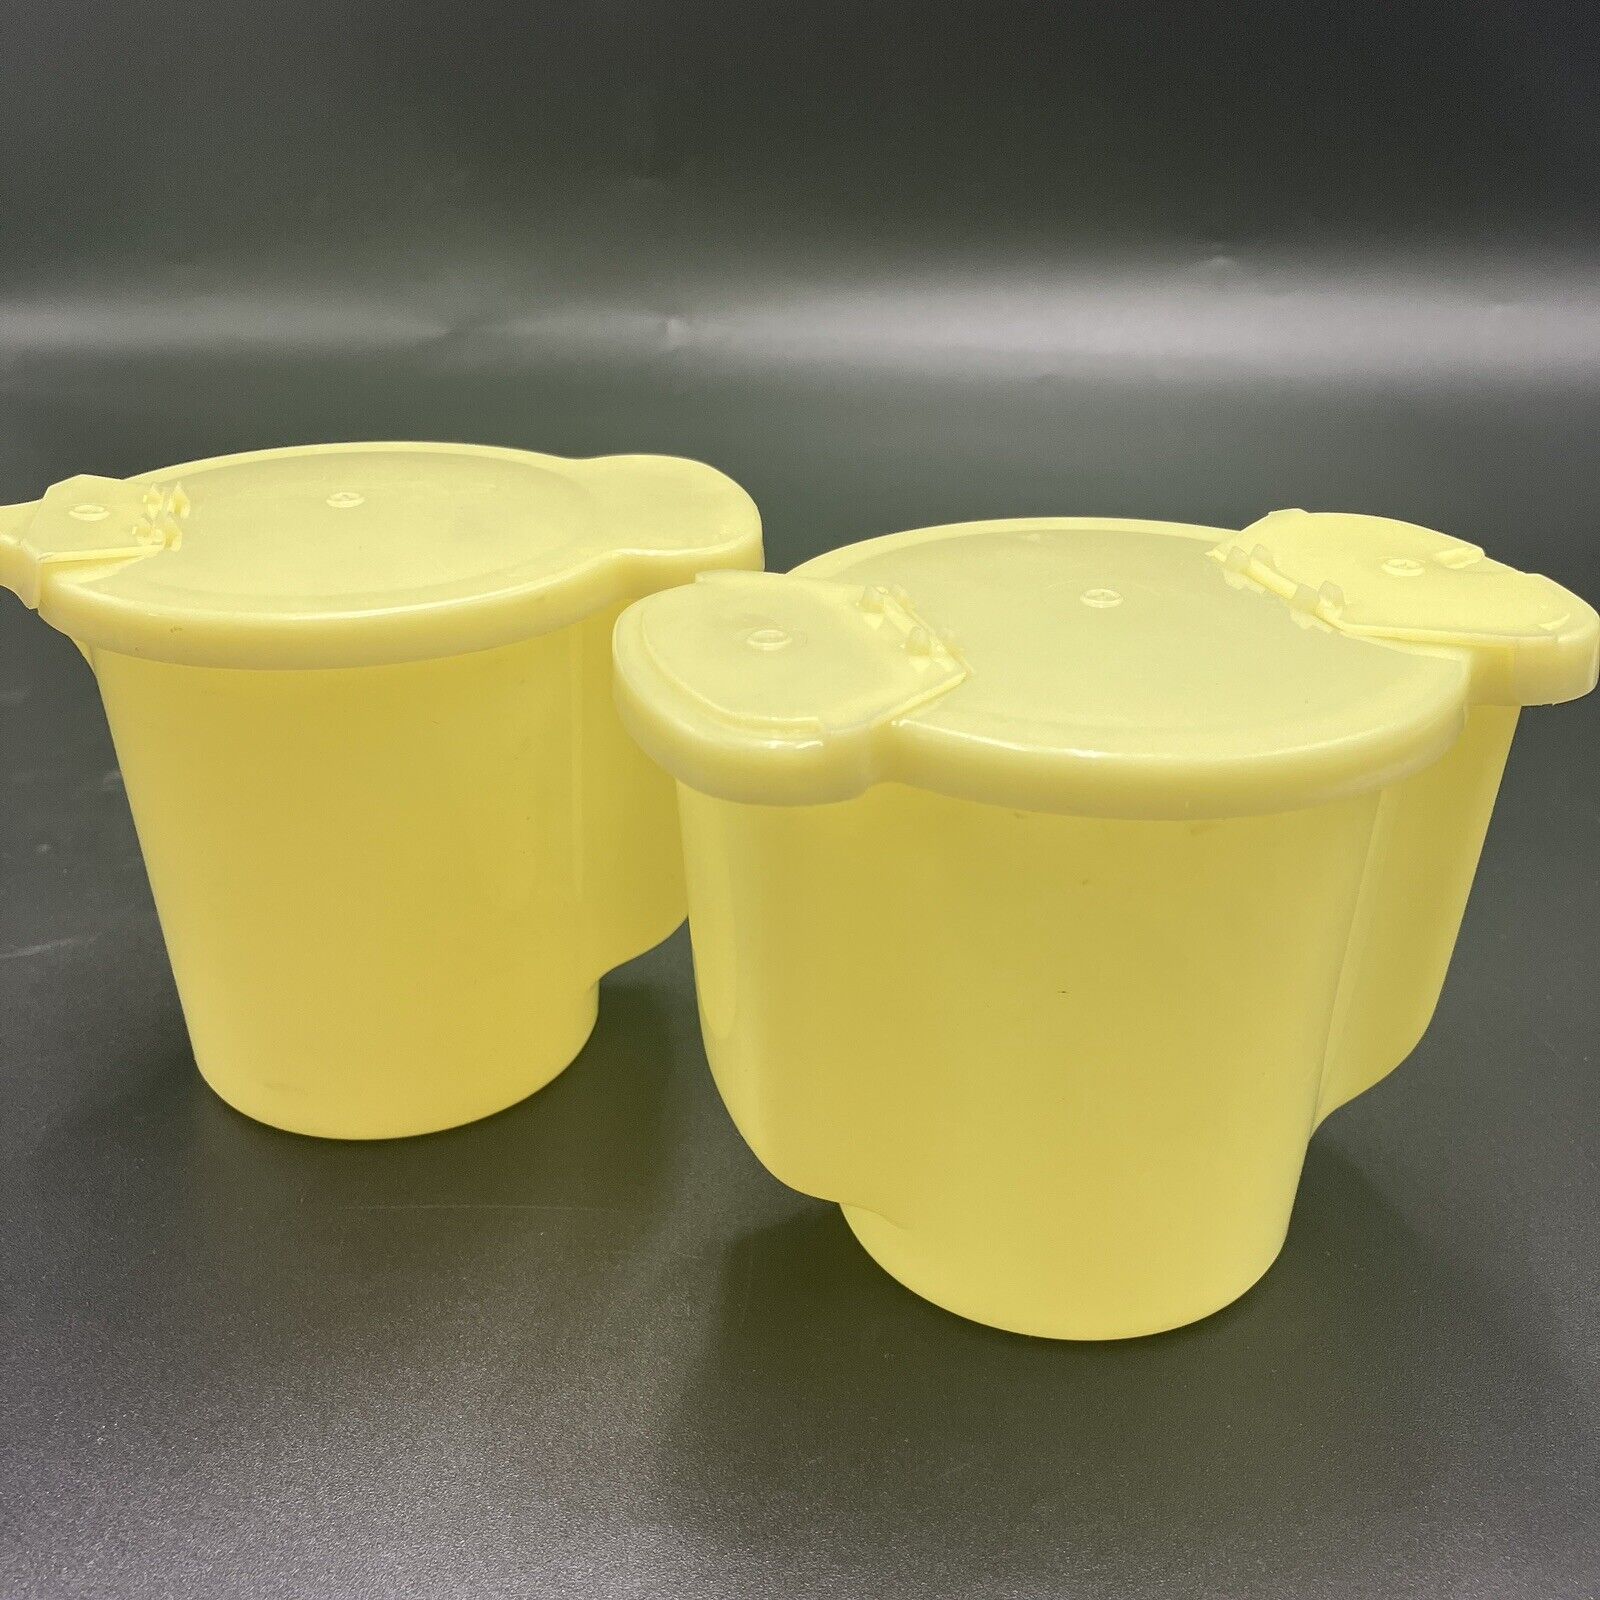 Vtg Tupperware Yellow Sugar Bowl 577 and Creamer 574 Set with Flip Top Lids USA